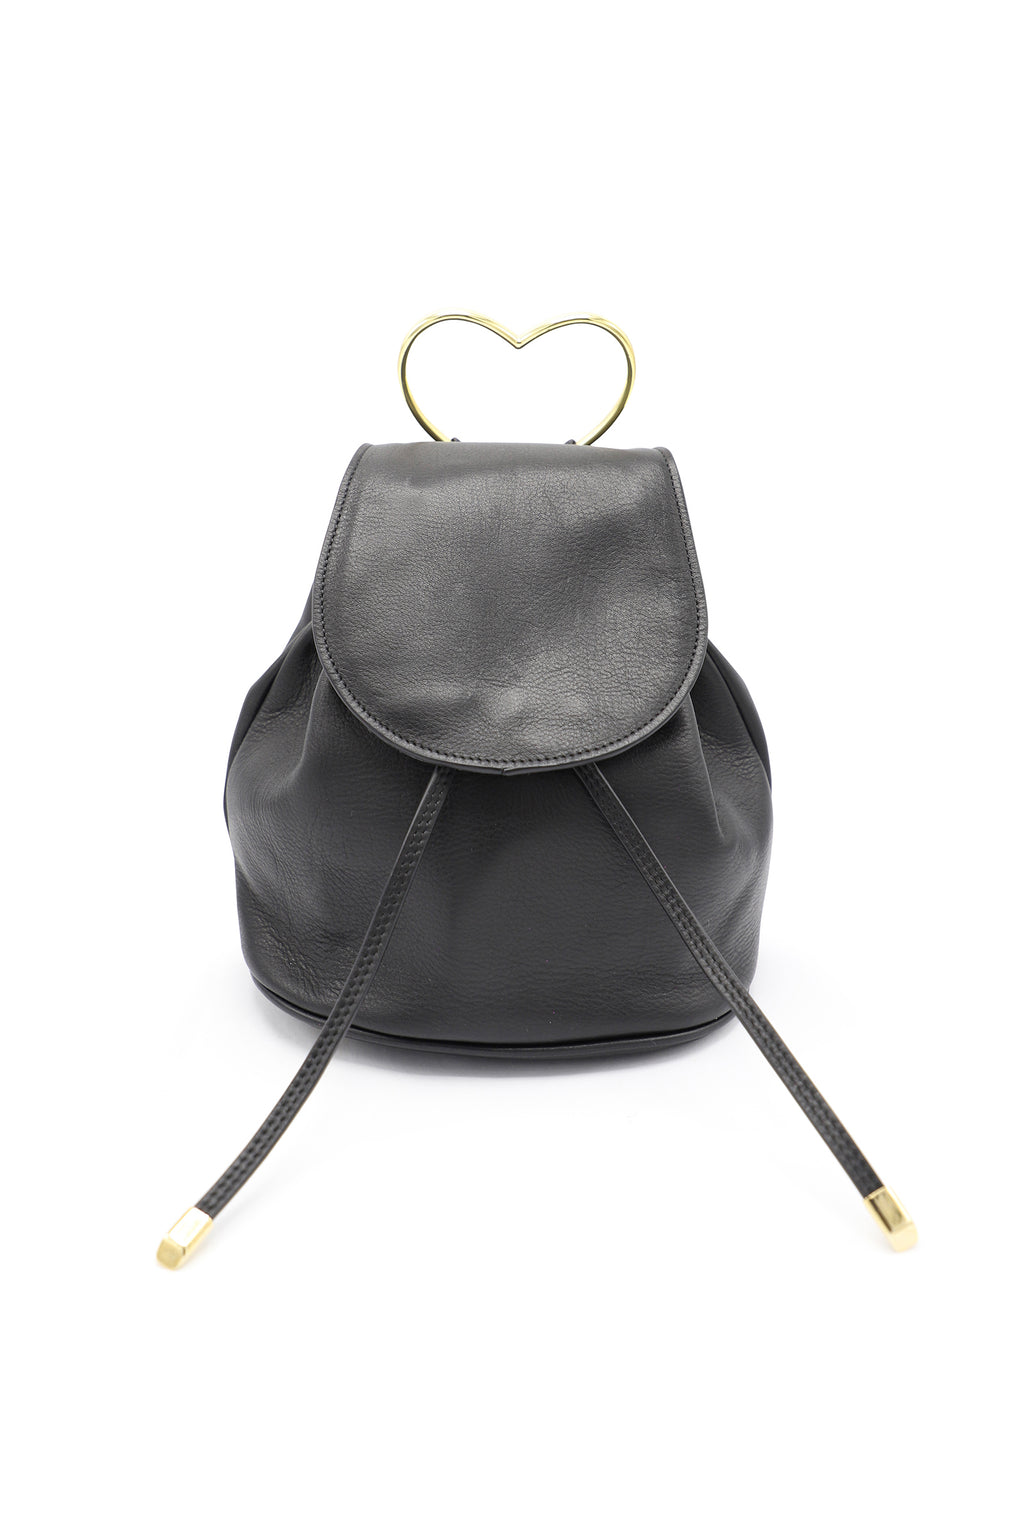 Heart Shaped Leather Bag